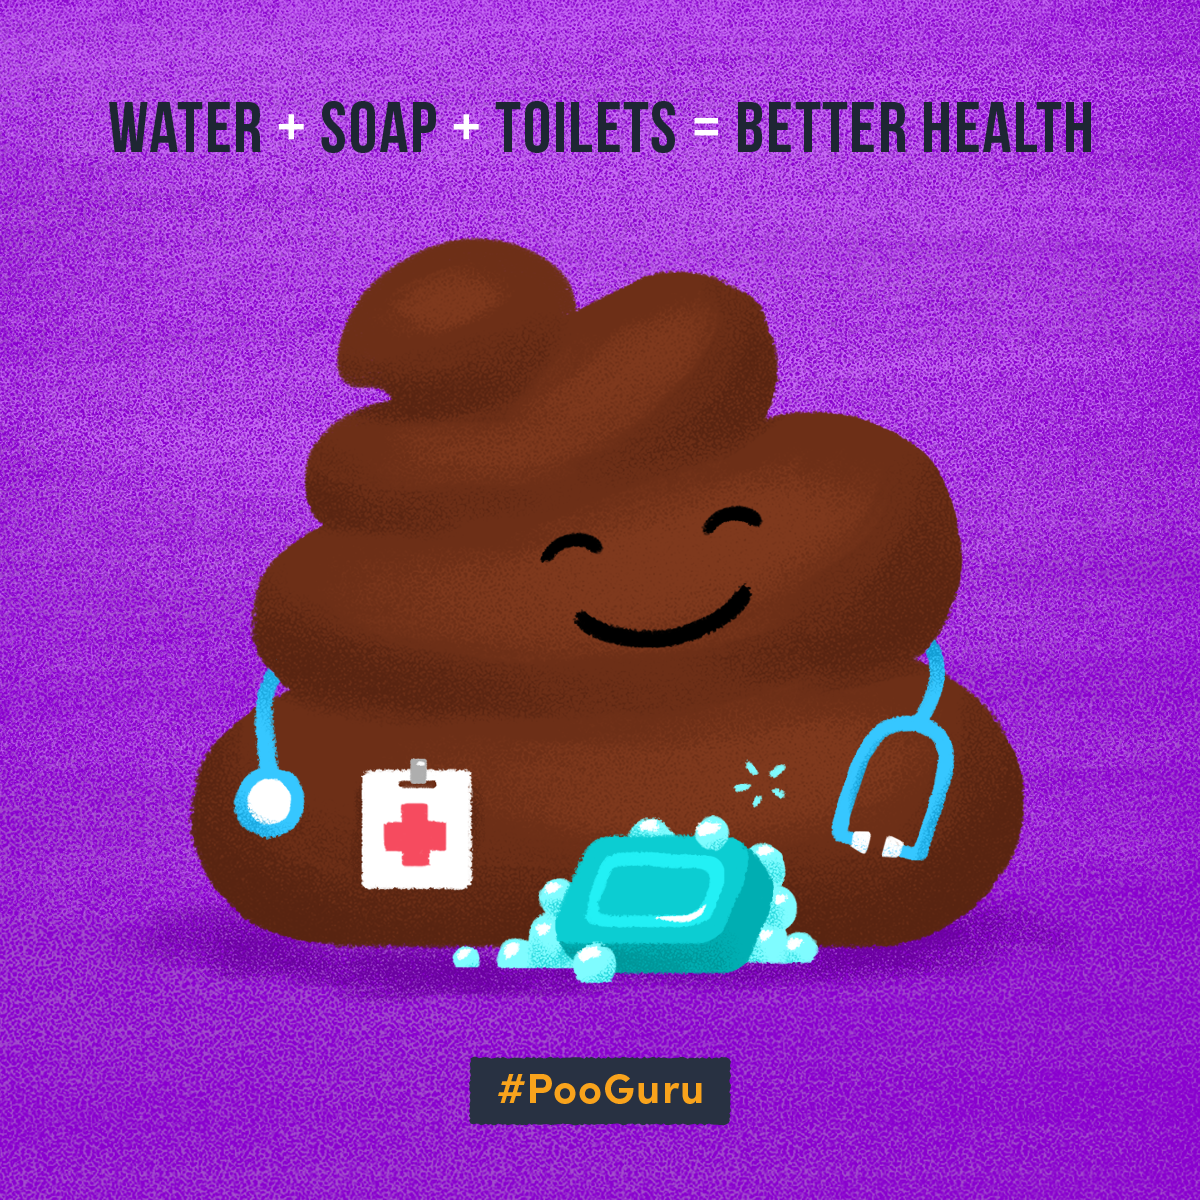 Poo guru says water + toilets + soap = better health